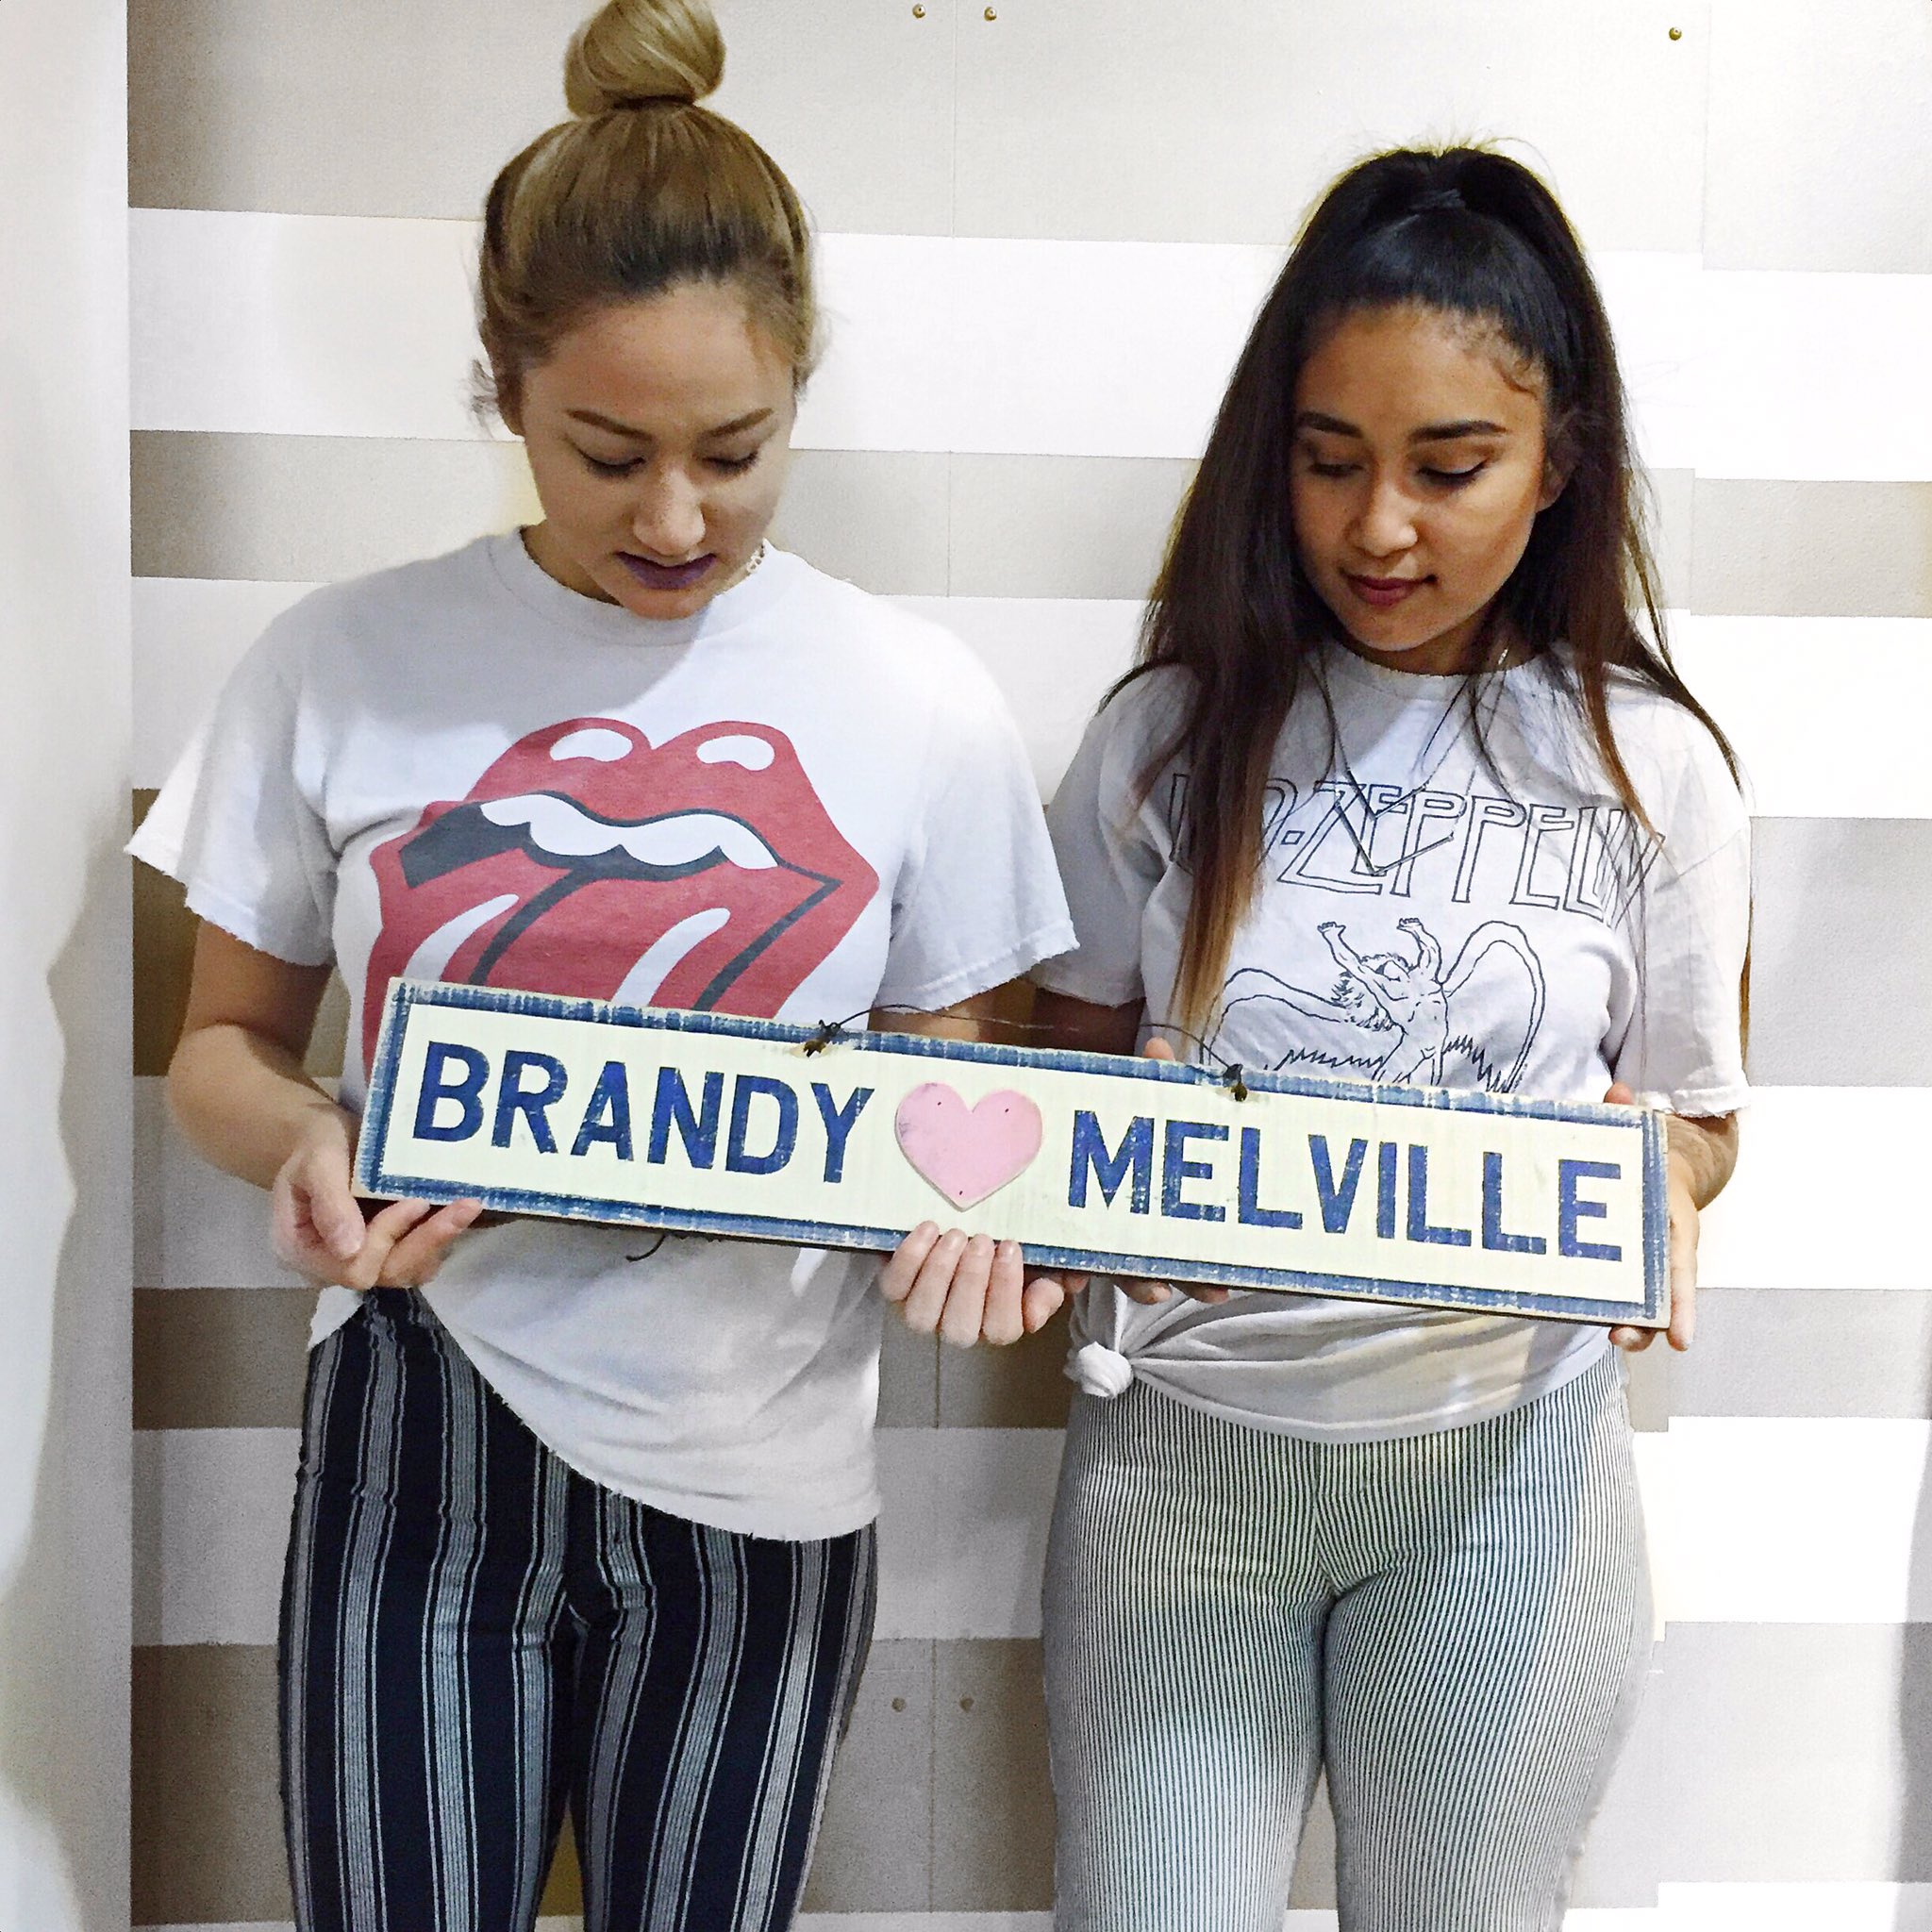 Brandy Melville: Instagram's First Retail Success - Bloomberg